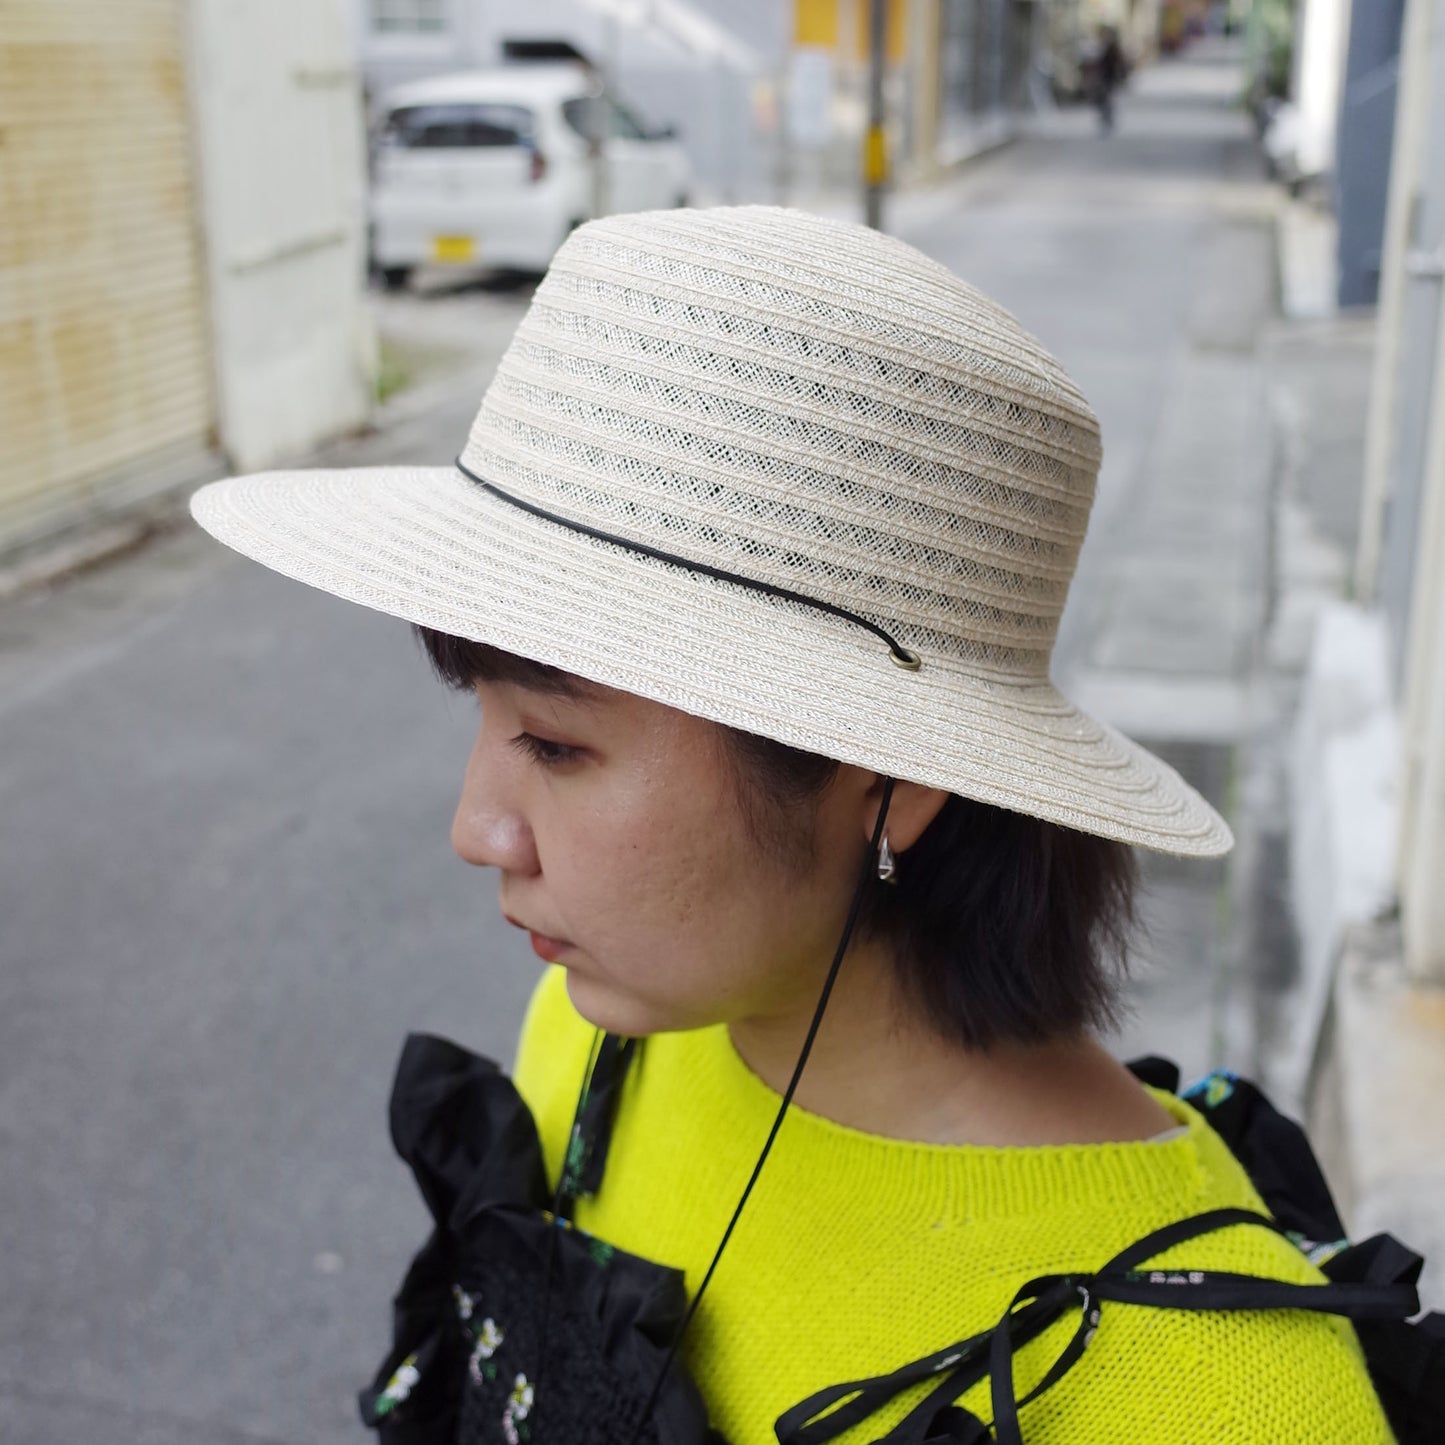 bocodeco "Abaca Combi Saunter Hat Ⅱ" / ボコデコ"アバカ草お散歩ハット"